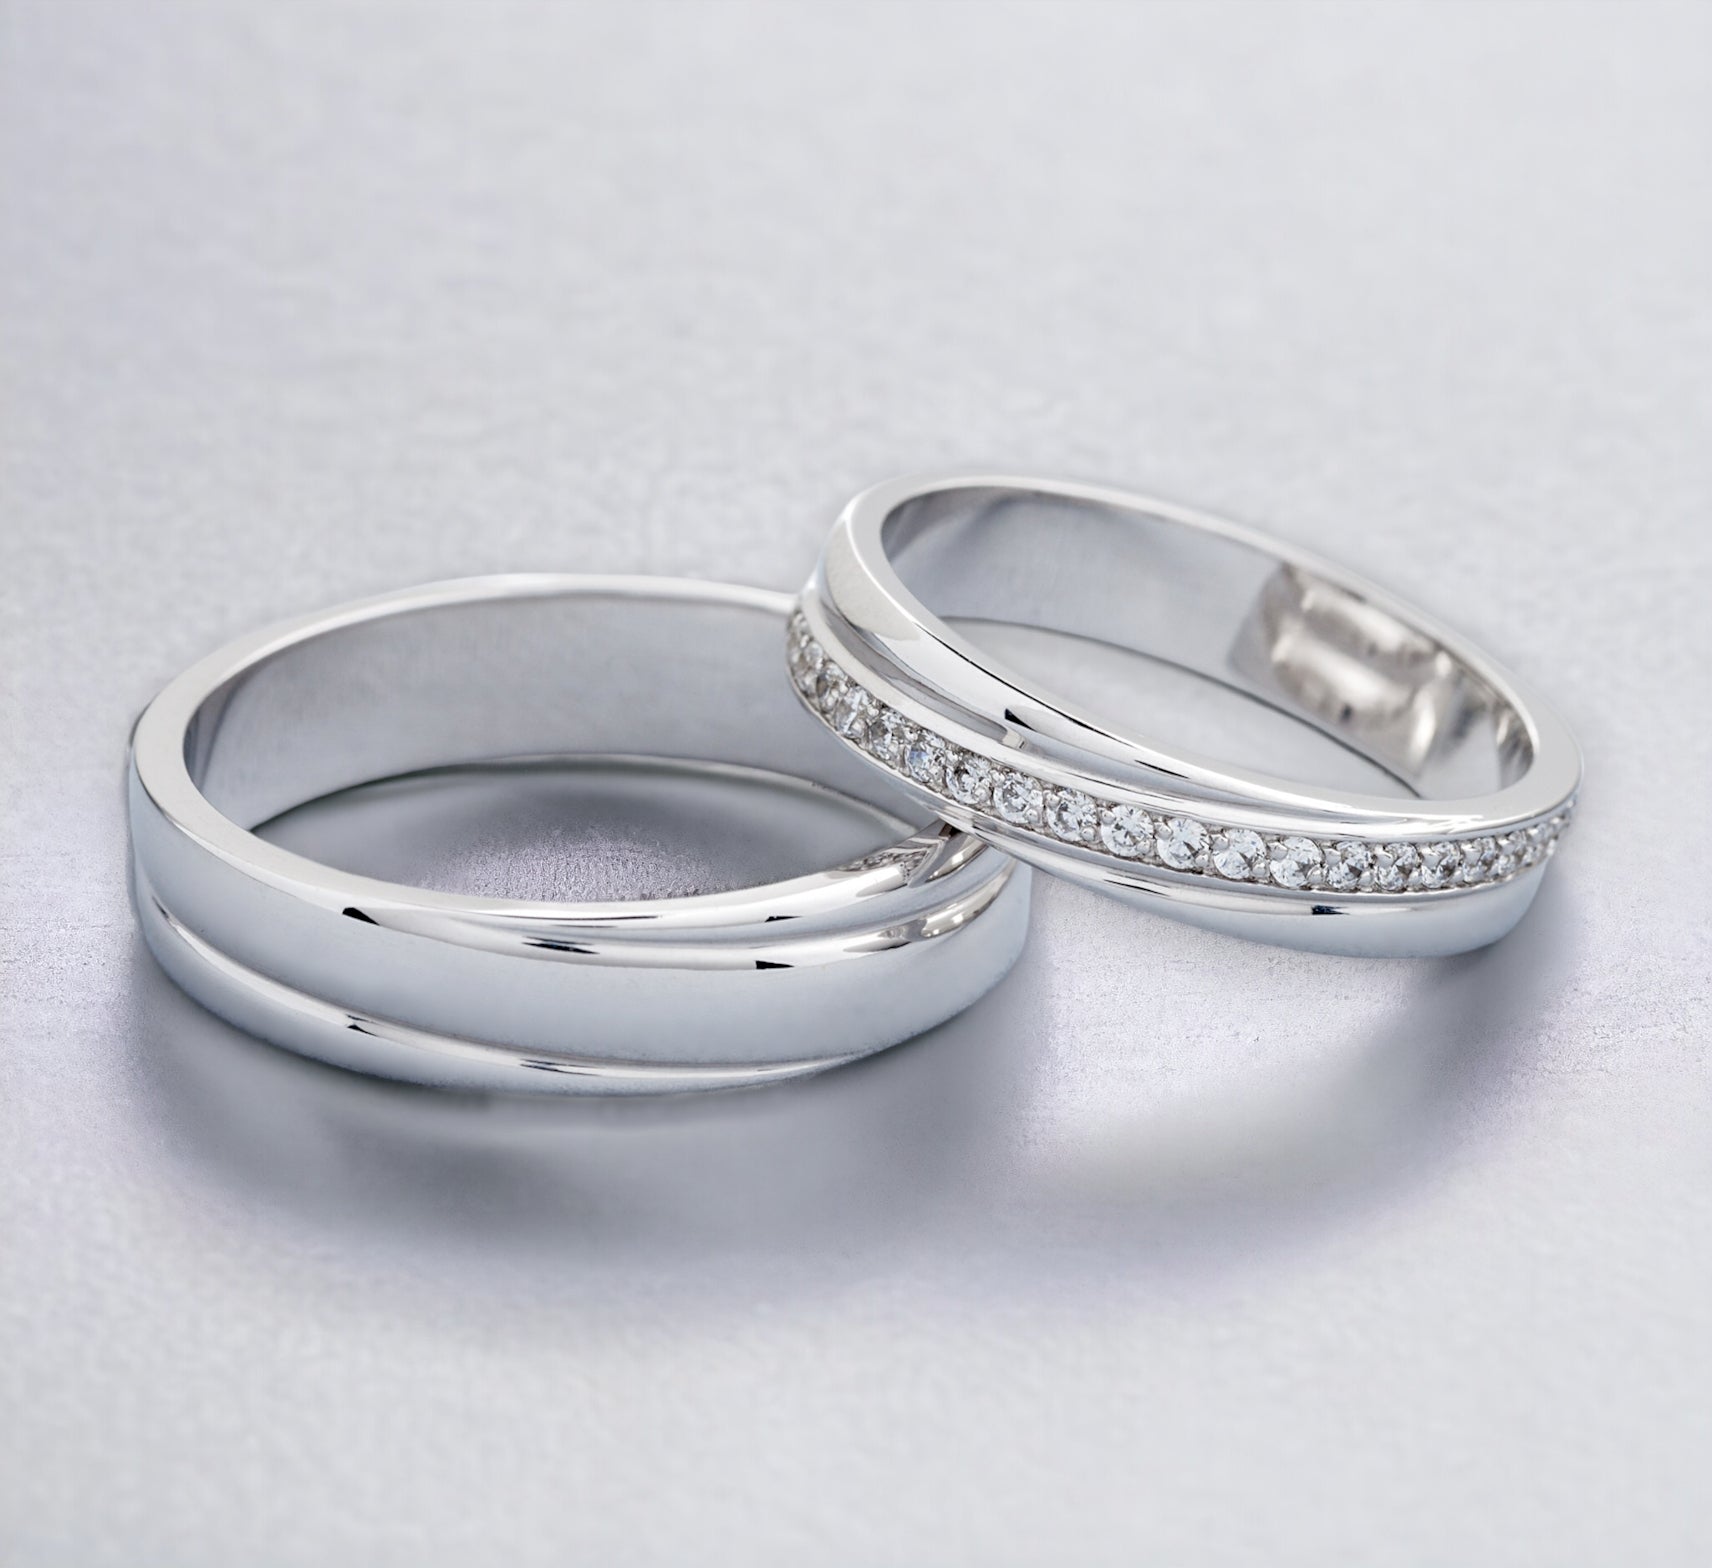 Gold wedding rings set, matching wedding bands, white gold wedding ring with diamonds 